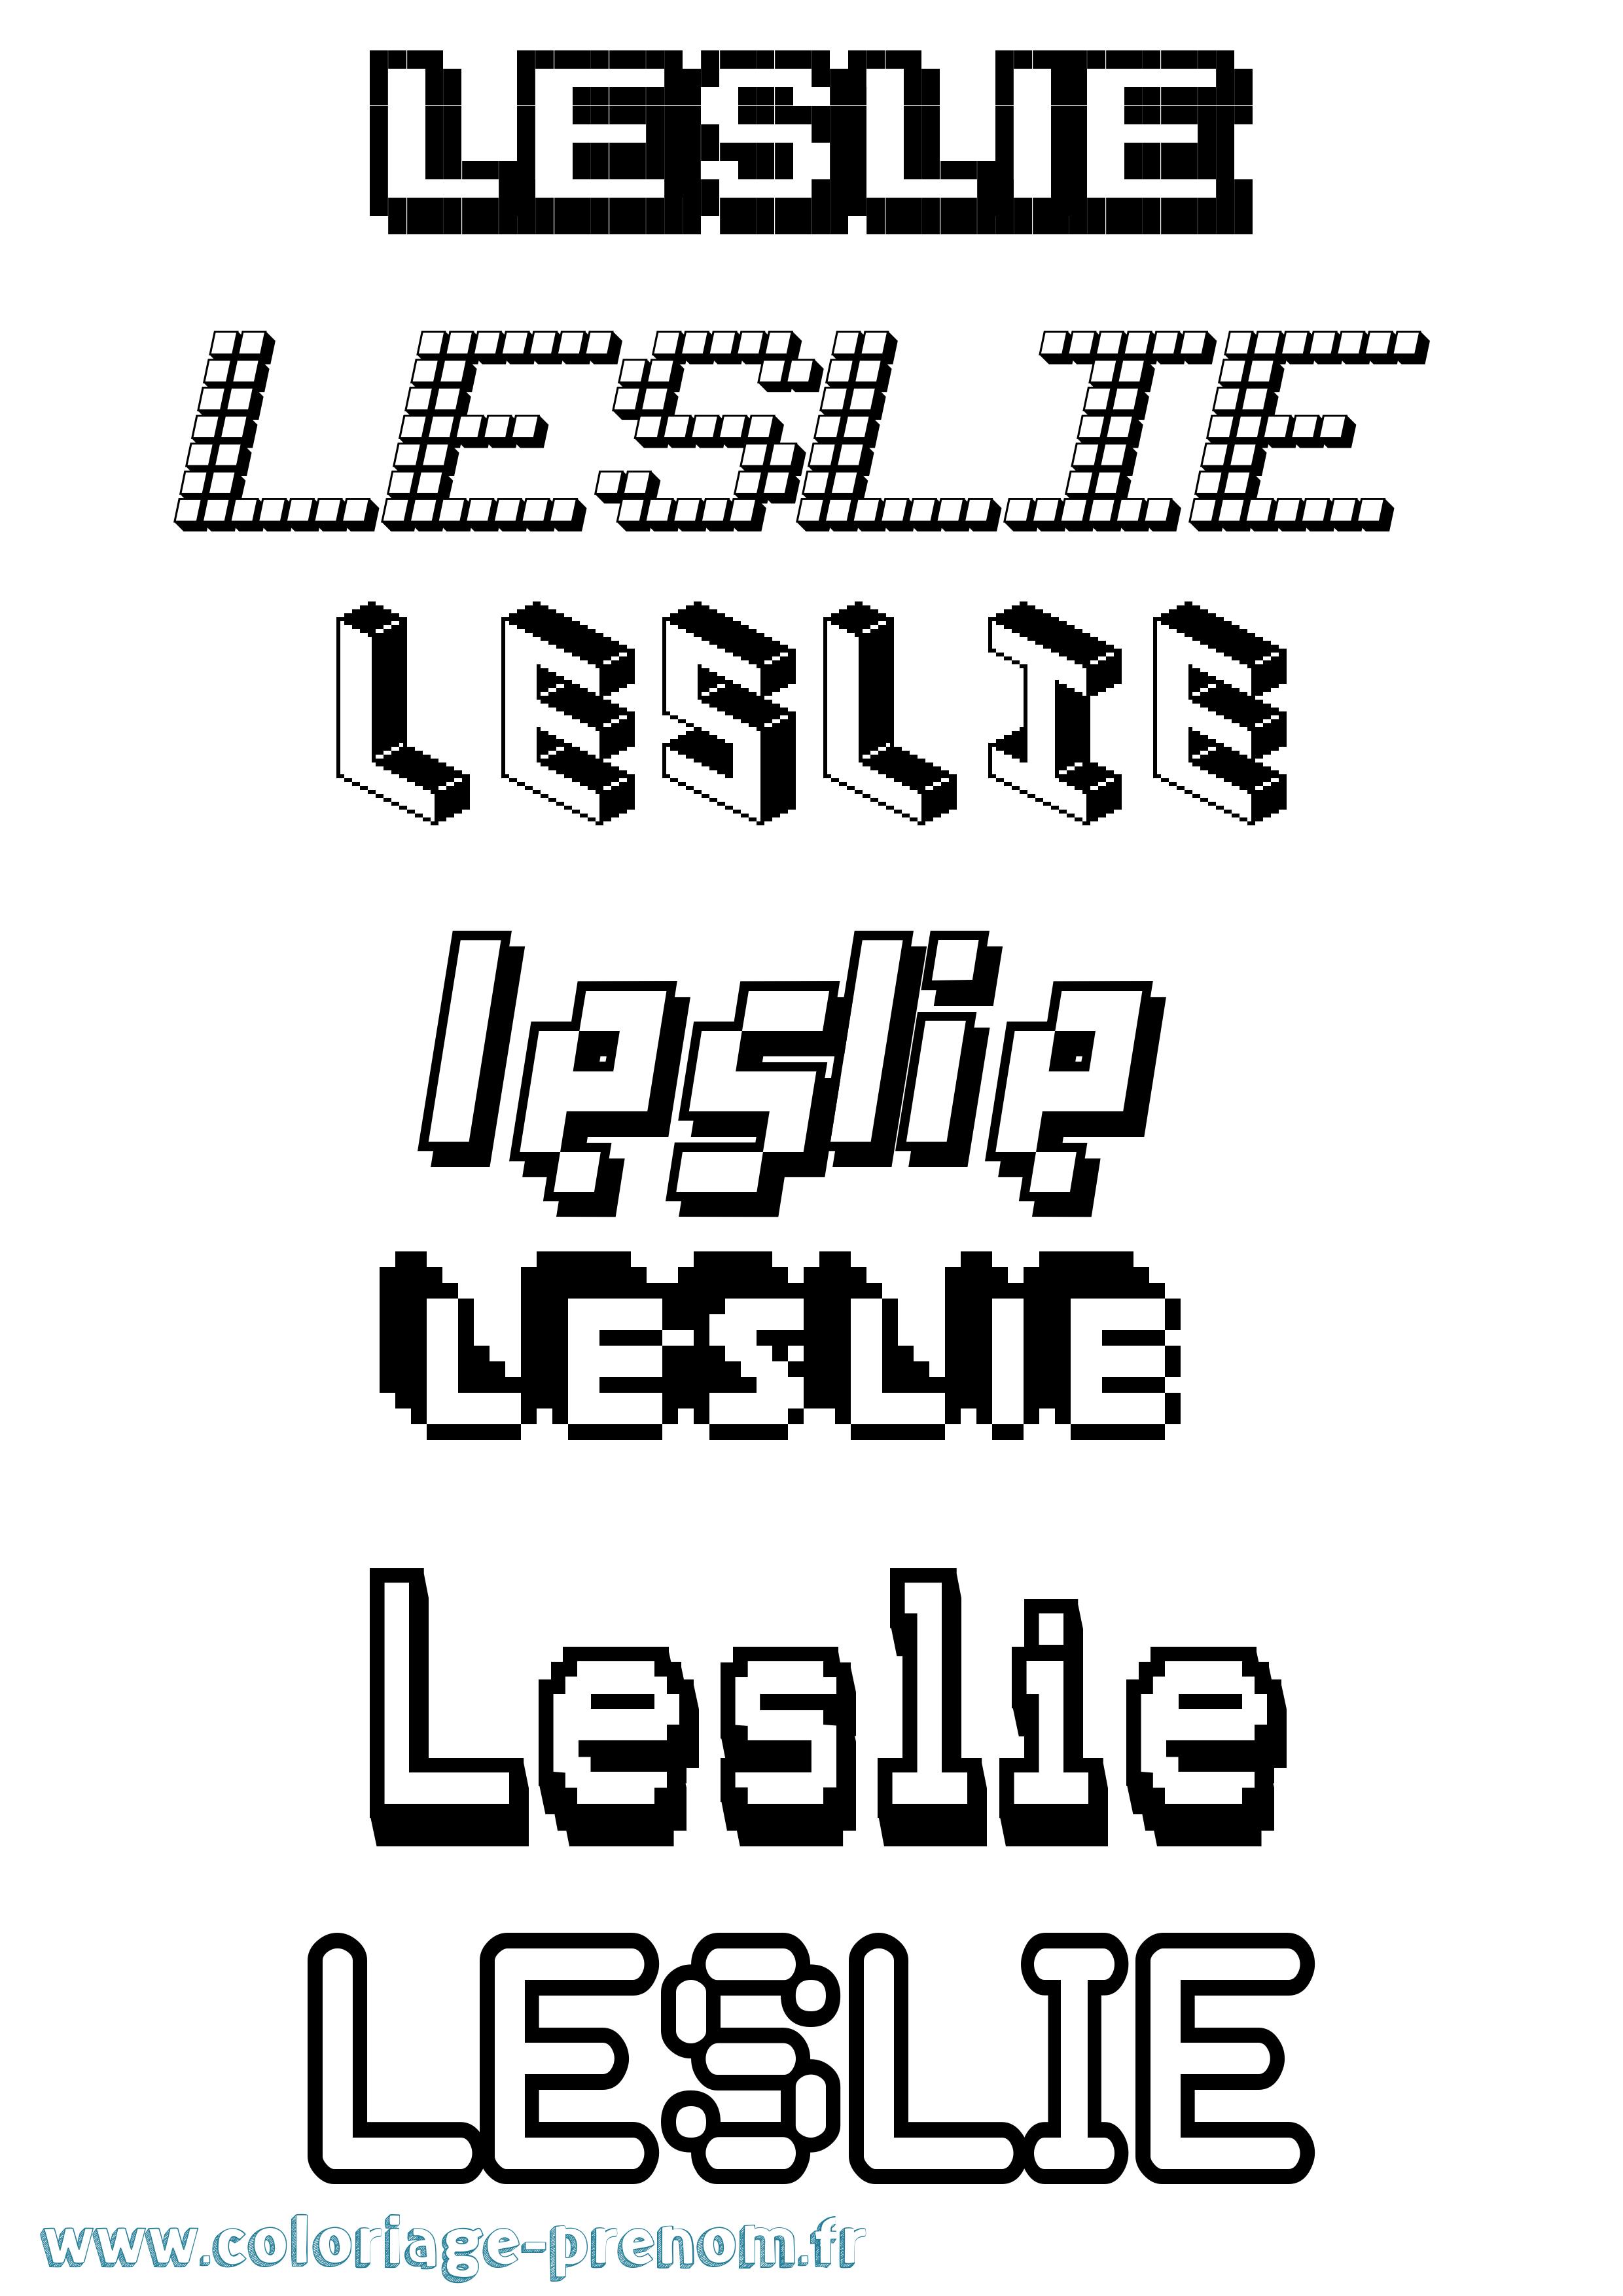 Coloriage prénom Leslie